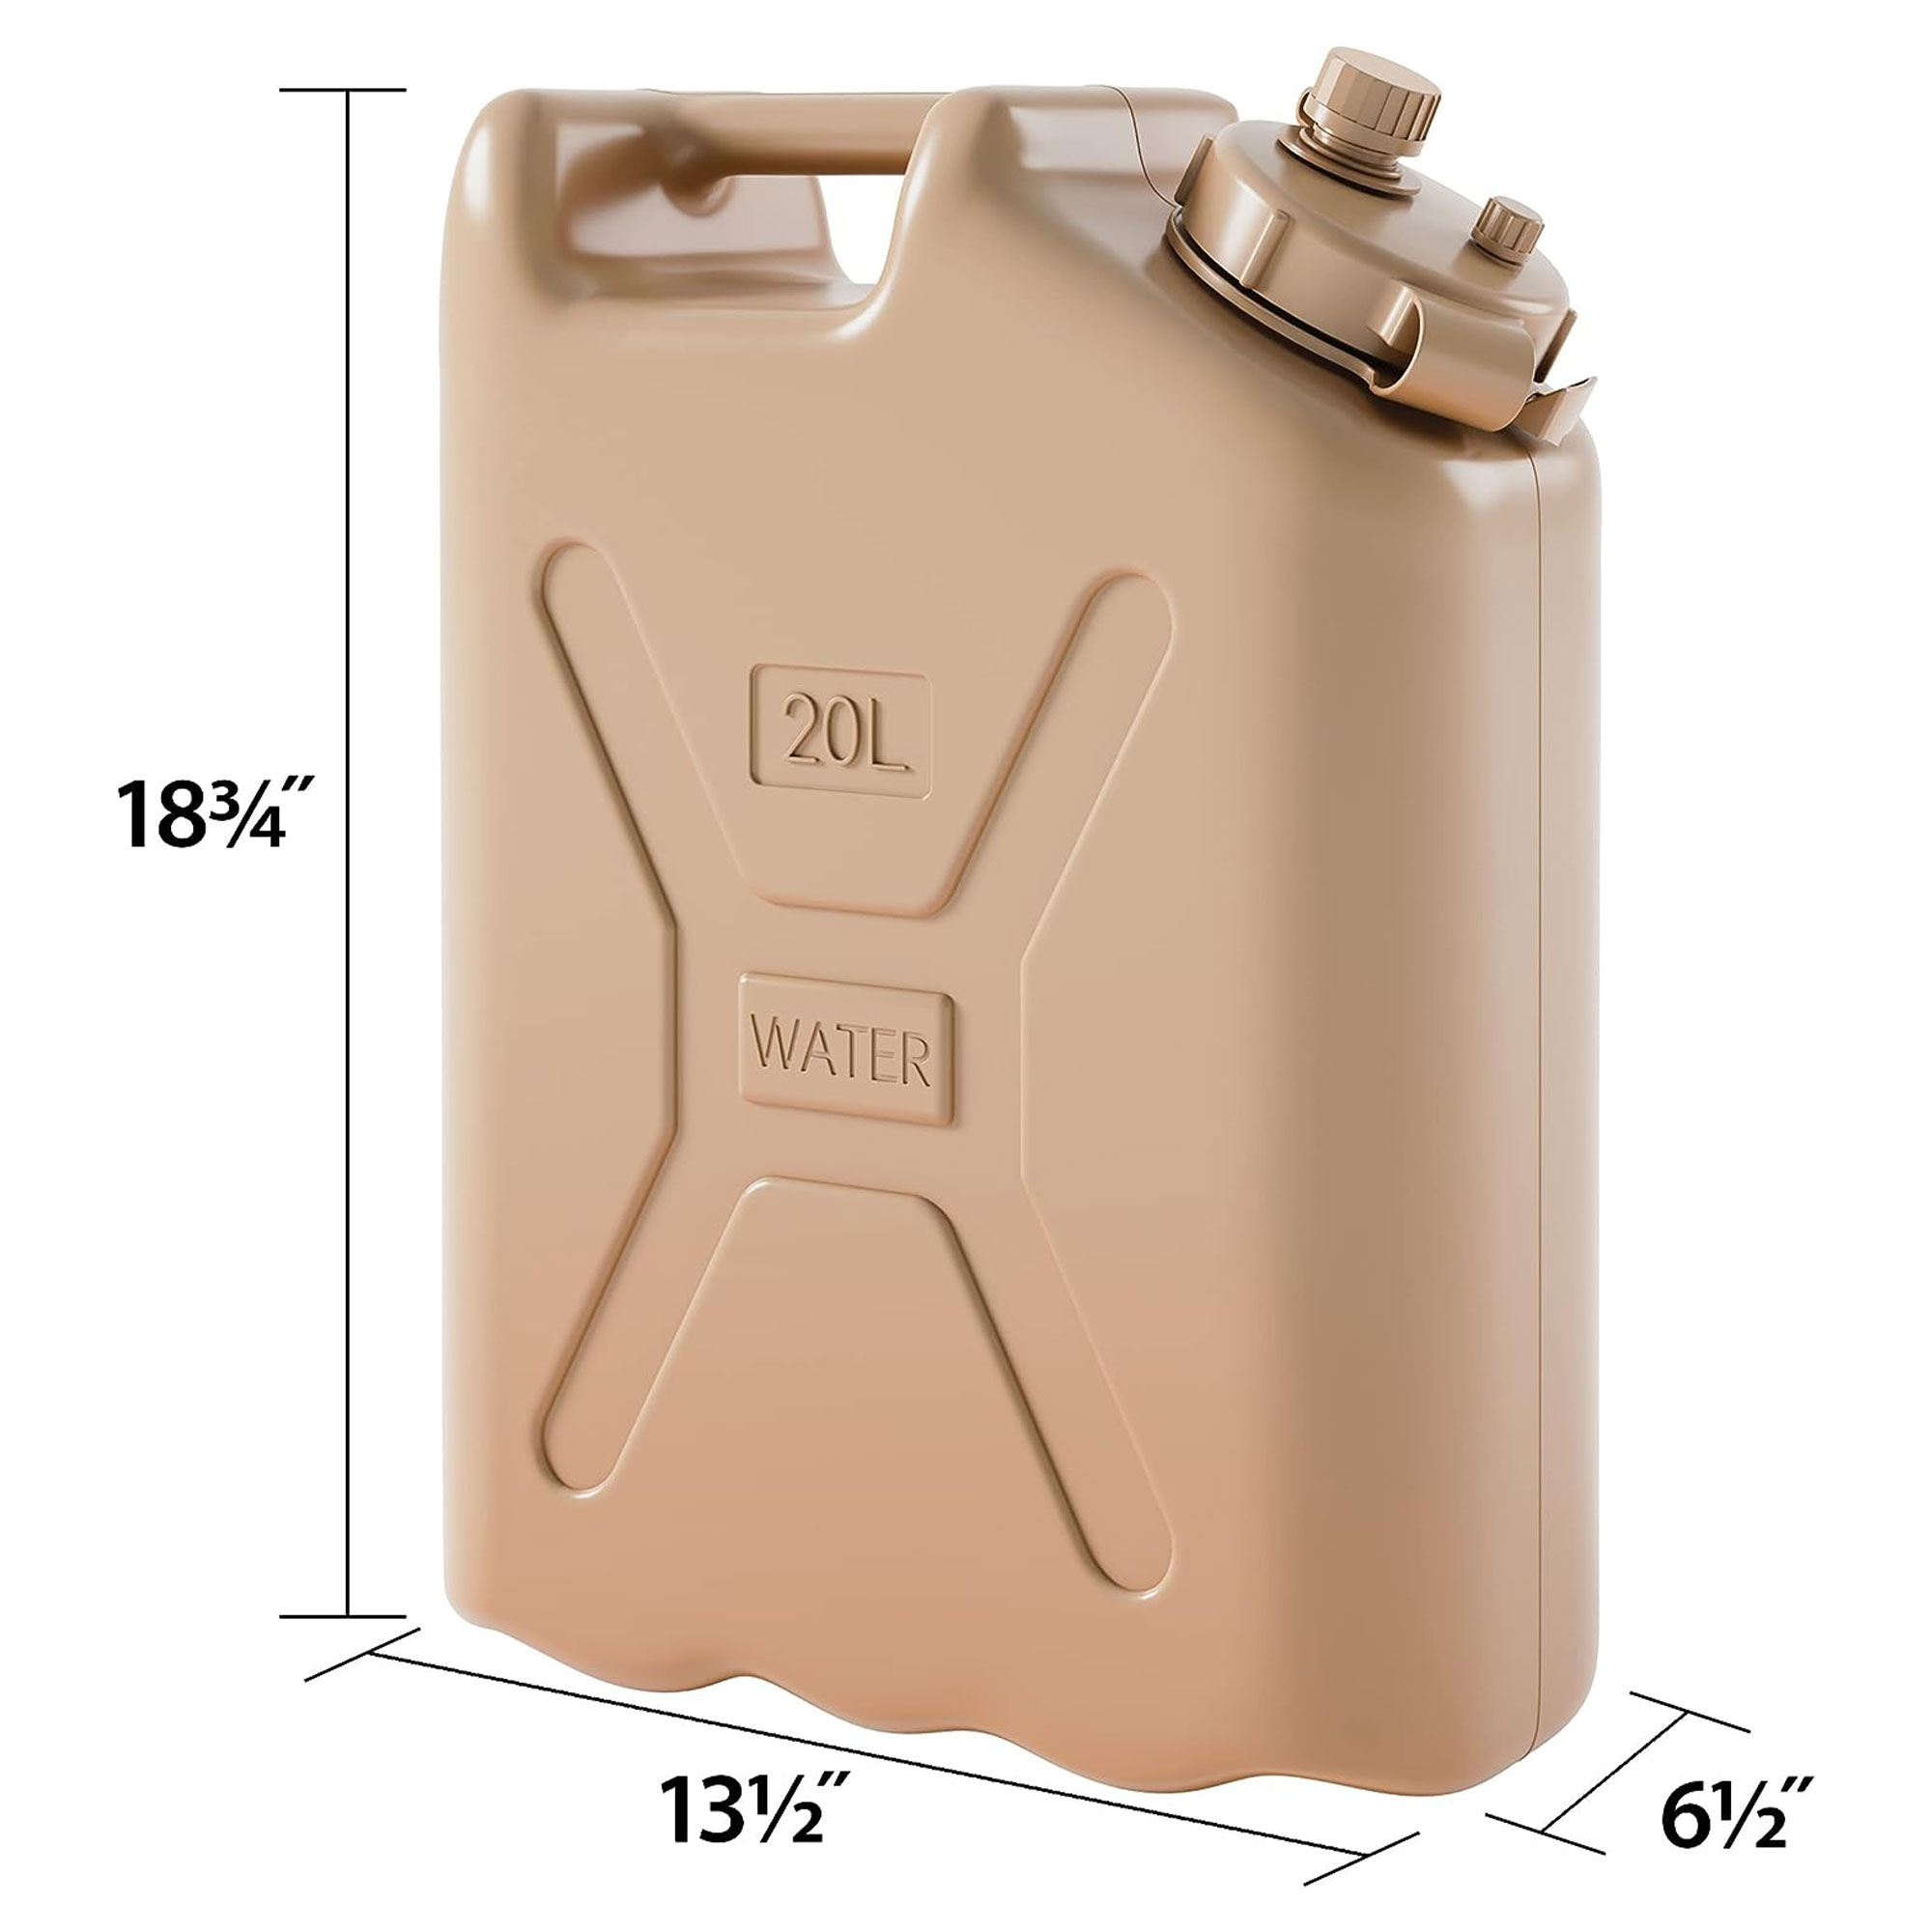 Scepter Lightweight BPA 5 Gallon 20 Liter Water Storage Container, Sand - image 2 of 12